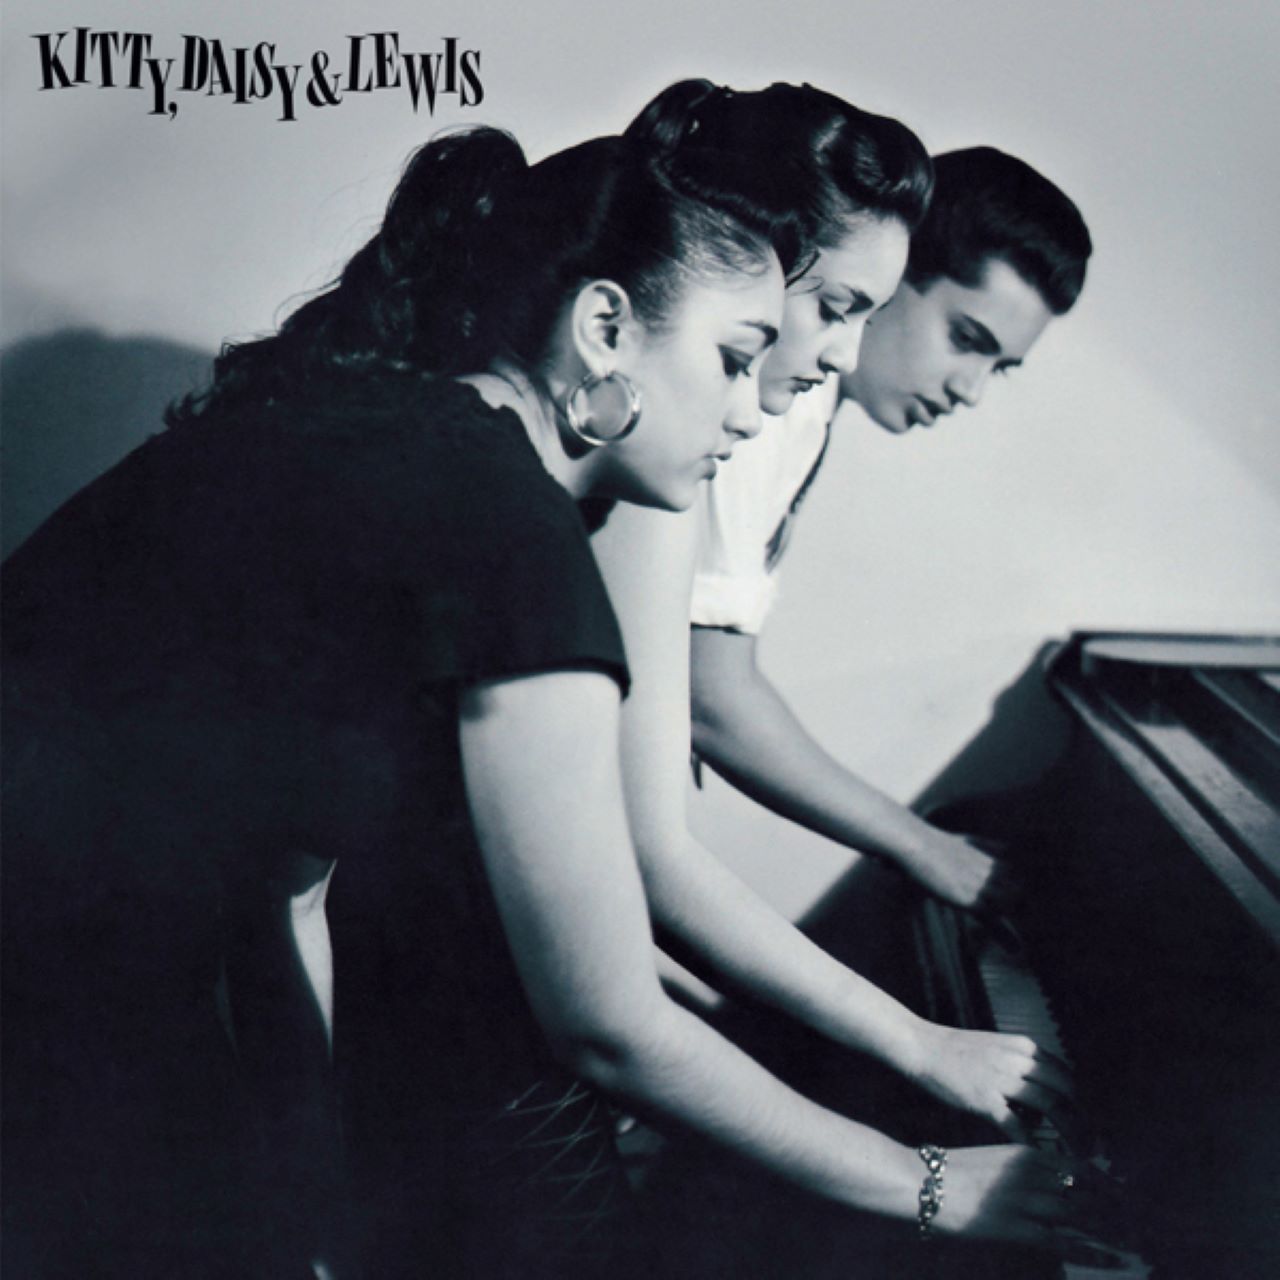 Kitty Daisy & Lewis - Kitty Daisy & Lewis cover album